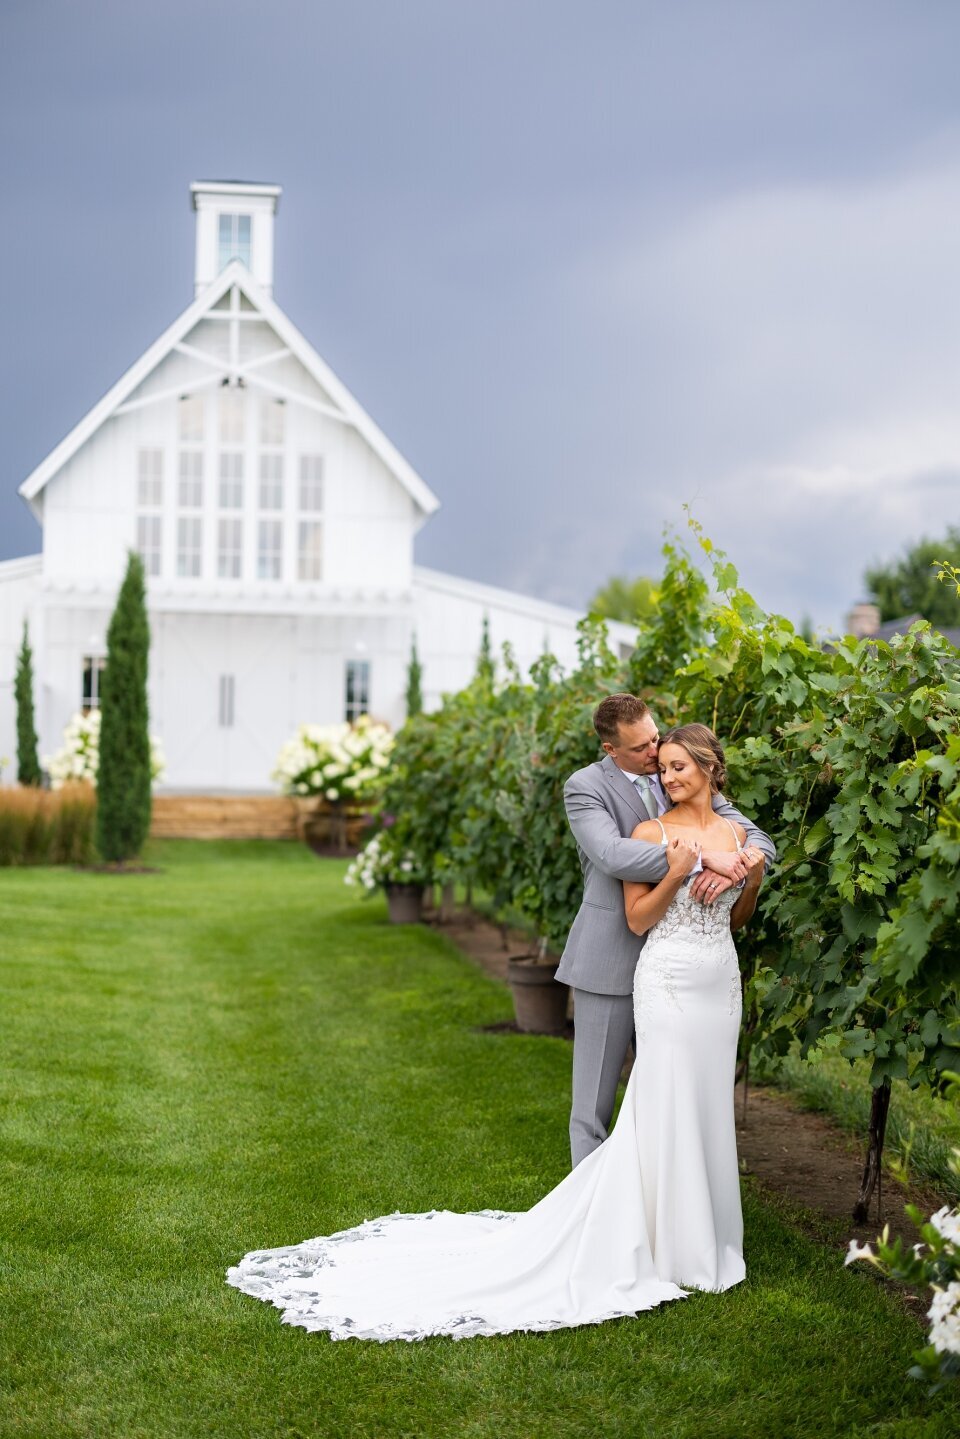 Eric Vest Photography - Redeemed Farm Wedding (56)